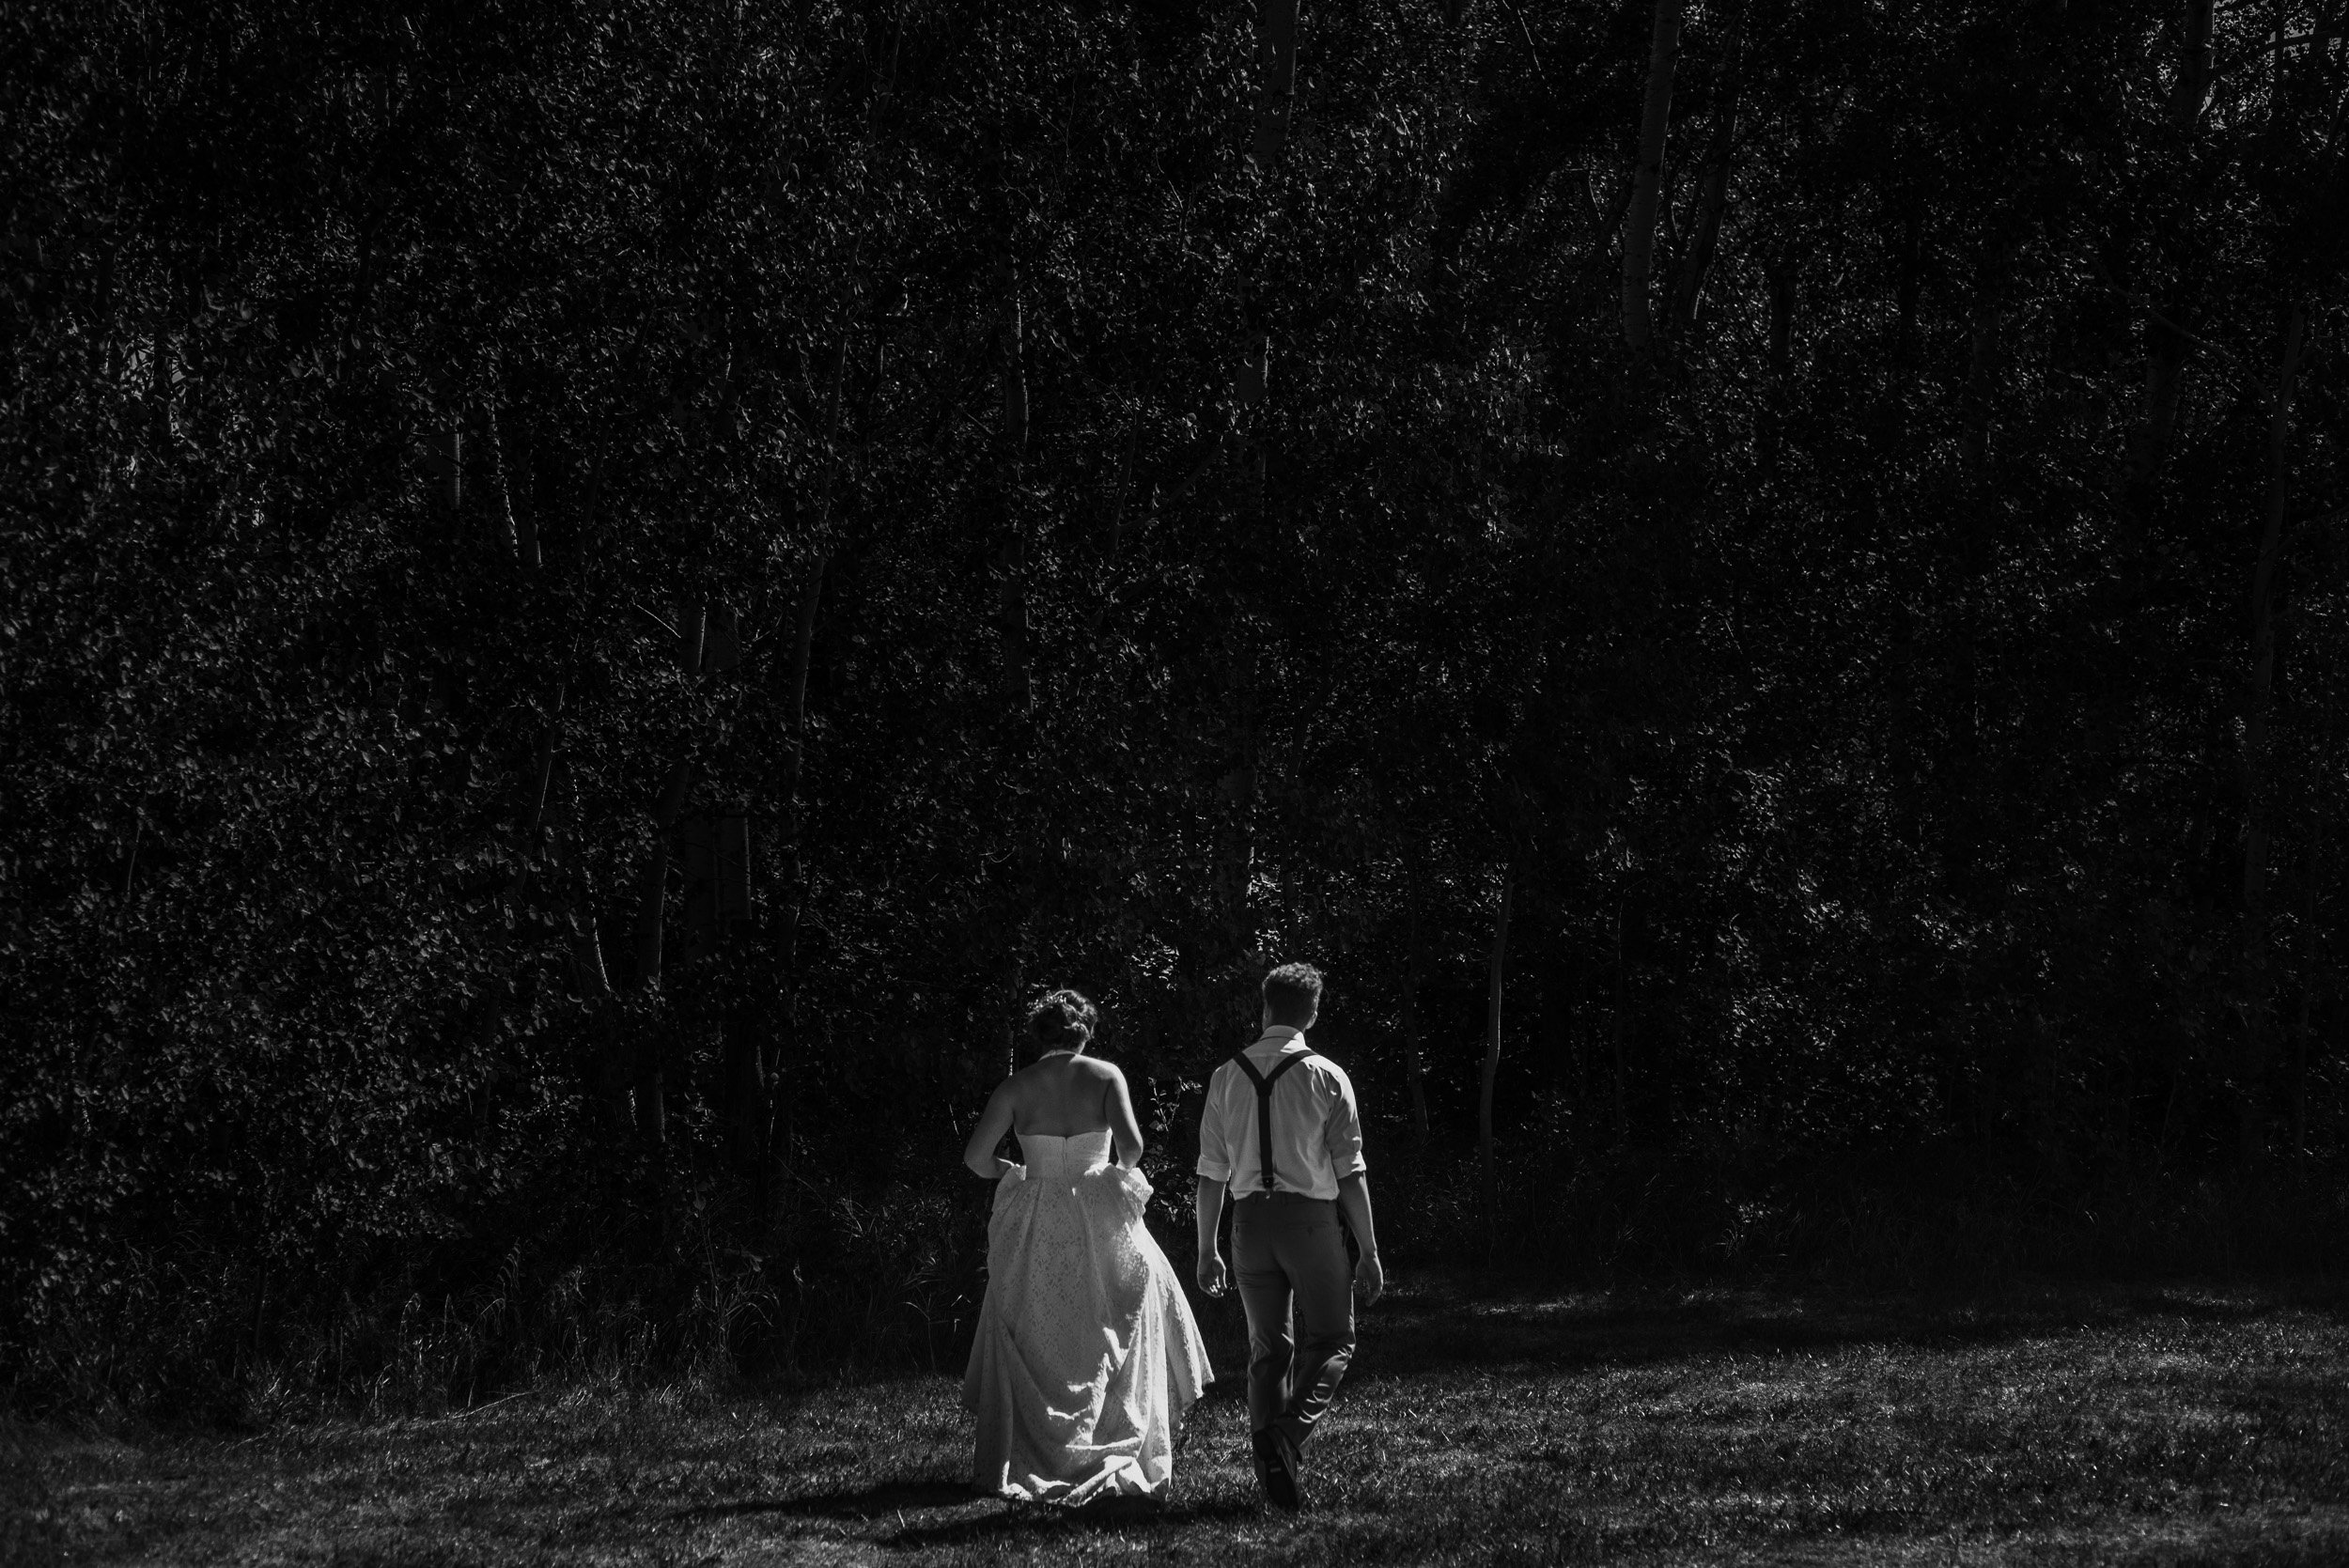 winnipeg wedding photographer - country wedding couple outdoor ceremony -55.jpg